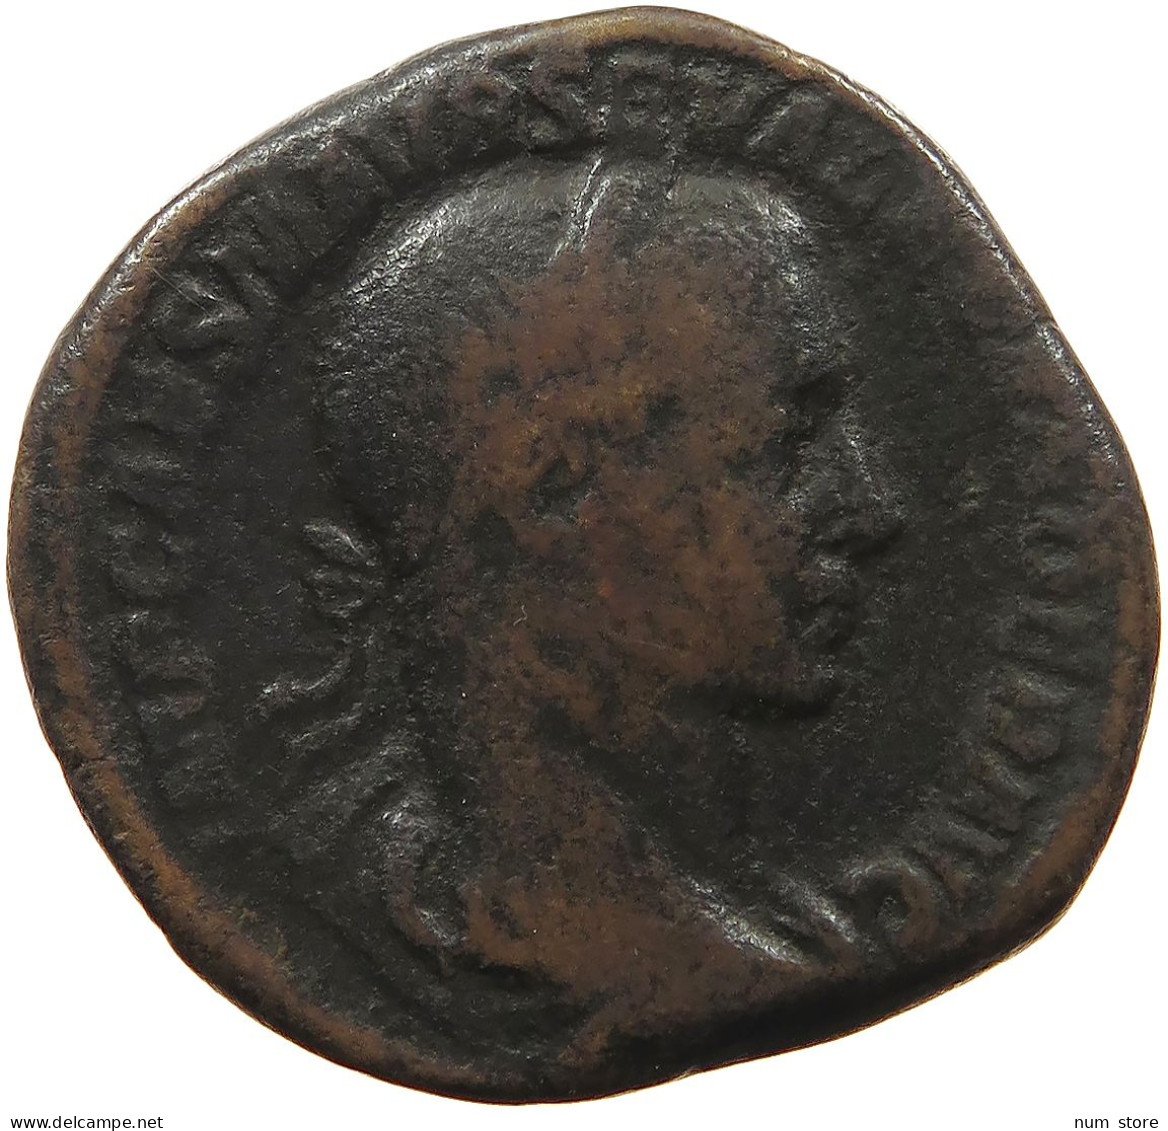 ROME EMPIRE SESTERTIUS  Severus Alexander, 222-235 #t158 0587 - The Severans (193 AD Tot 235 AD)